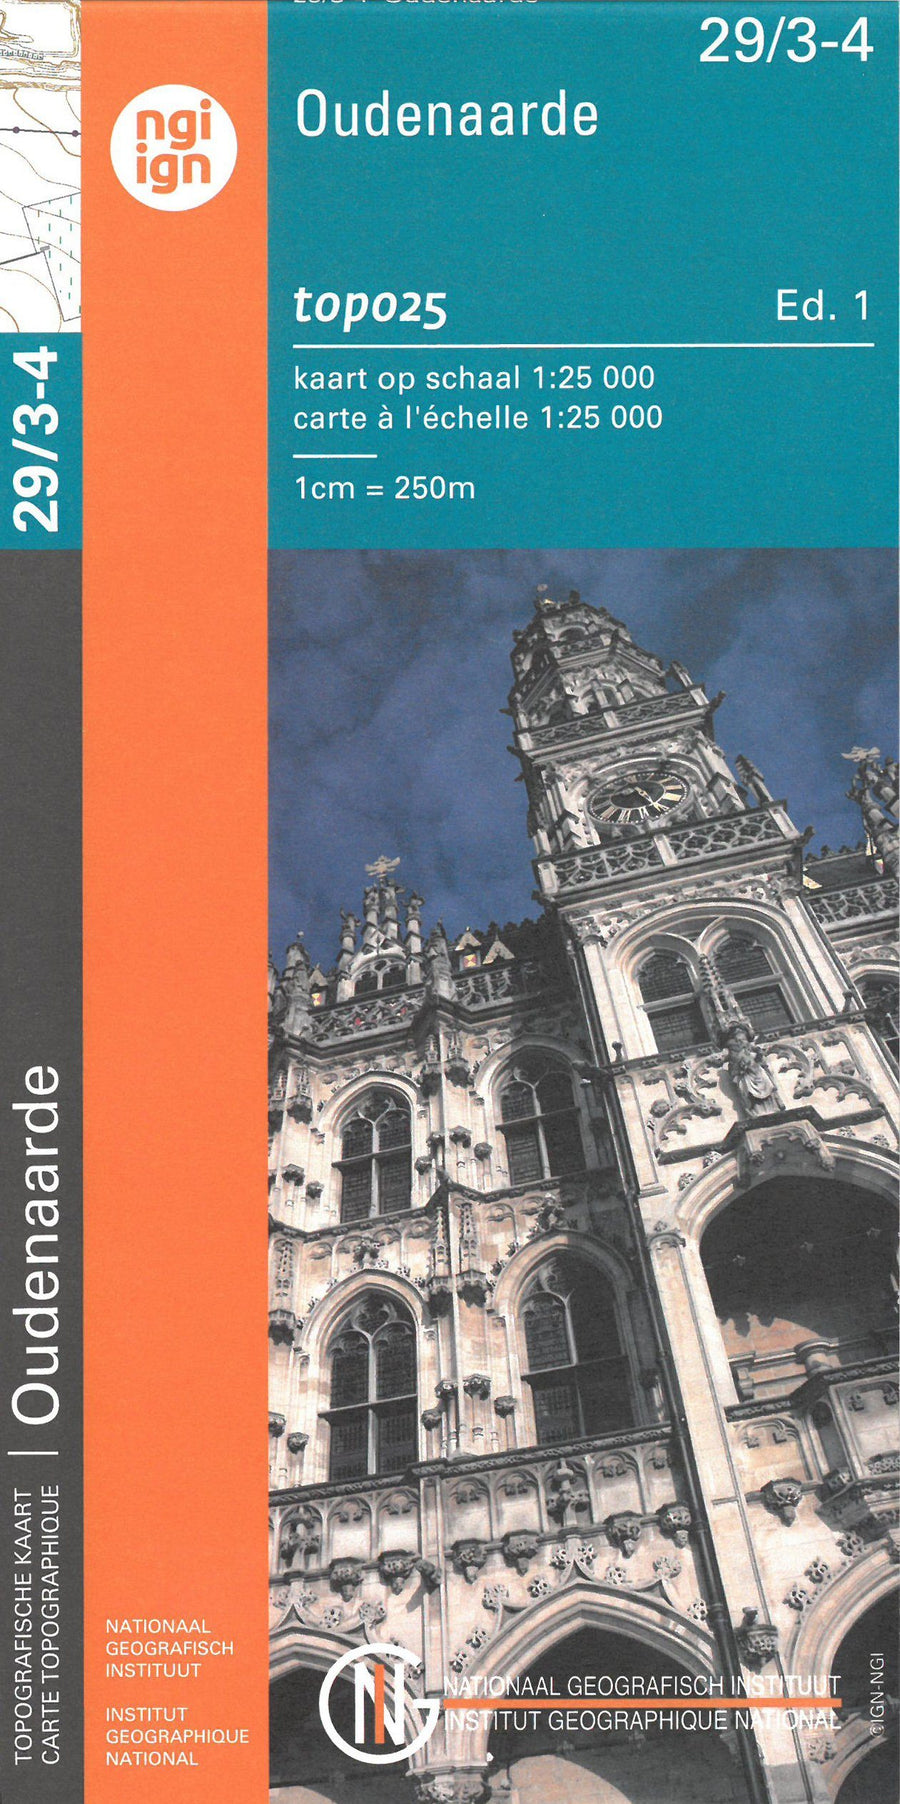 Carte topographique n° 29/3-4 - Oudenaarde (Belgique) | NGI topo 25 carte pliée IGN Belgique 